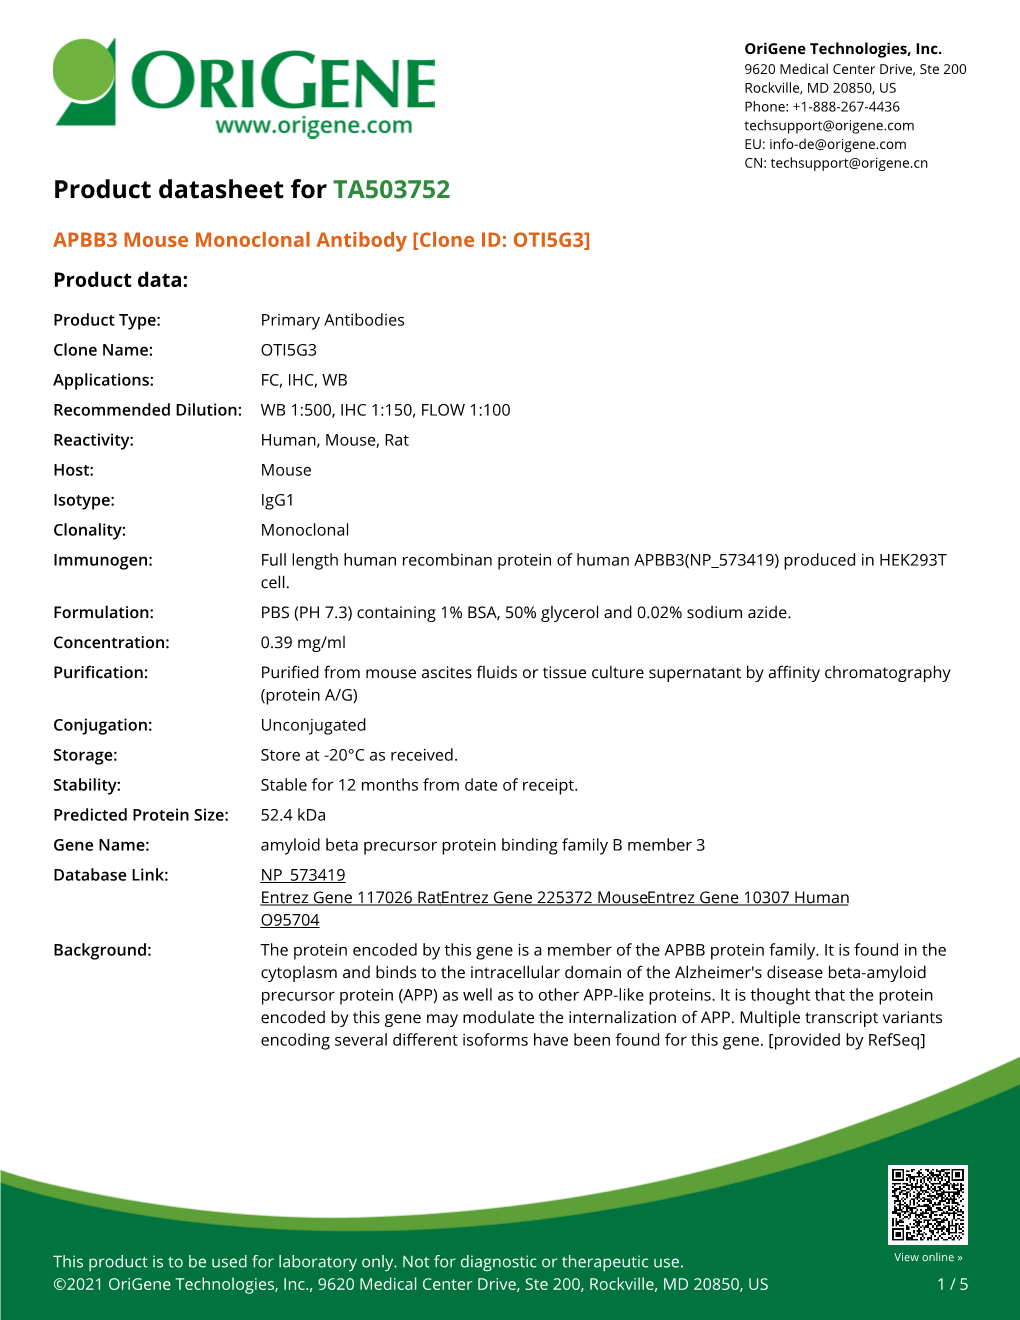 APBB3 Mouse Monoclonal Antibody [Clone ID: OTI5G3] Product Data